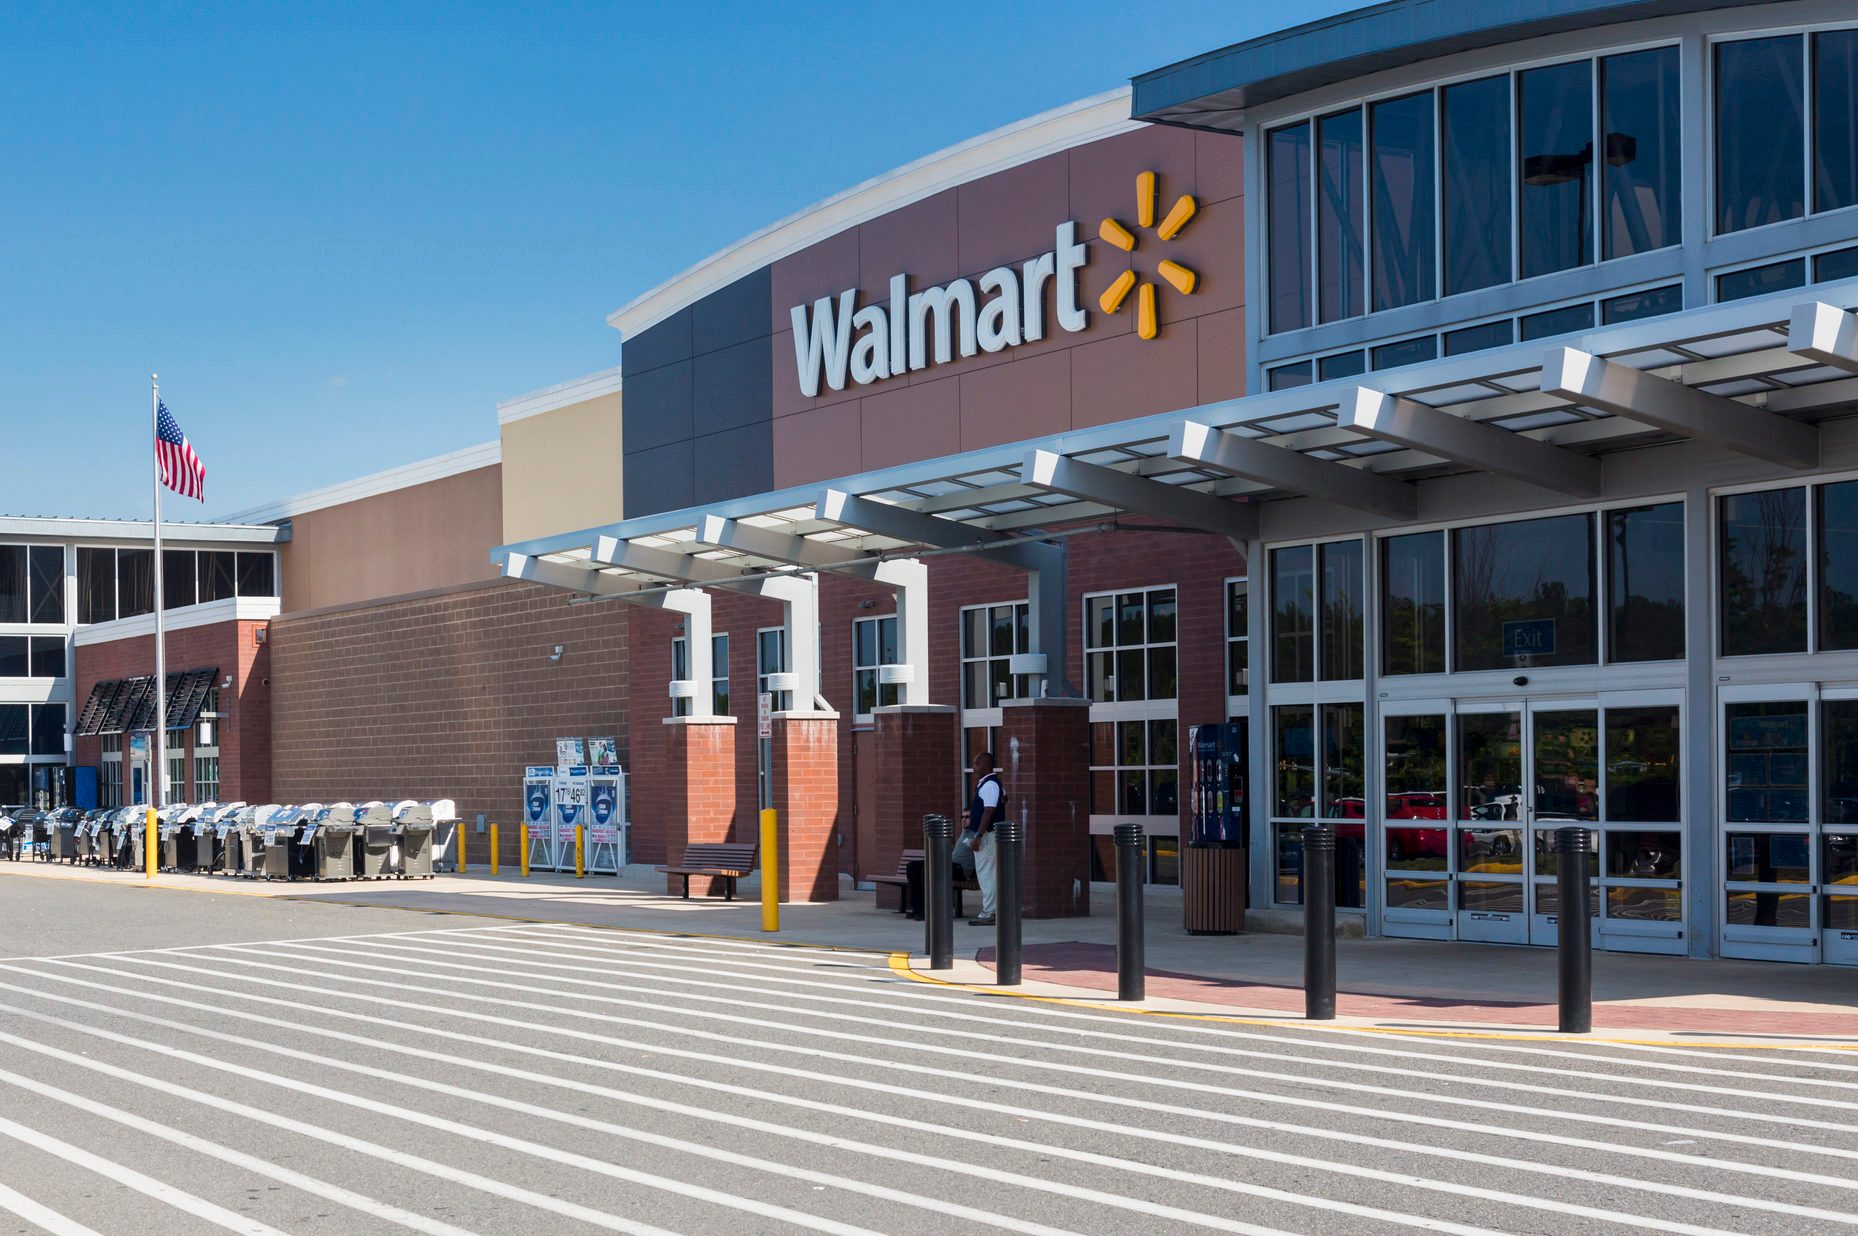 Entrance to large Walmart food supermarket or superstore in Haymarket, Virginia, USA